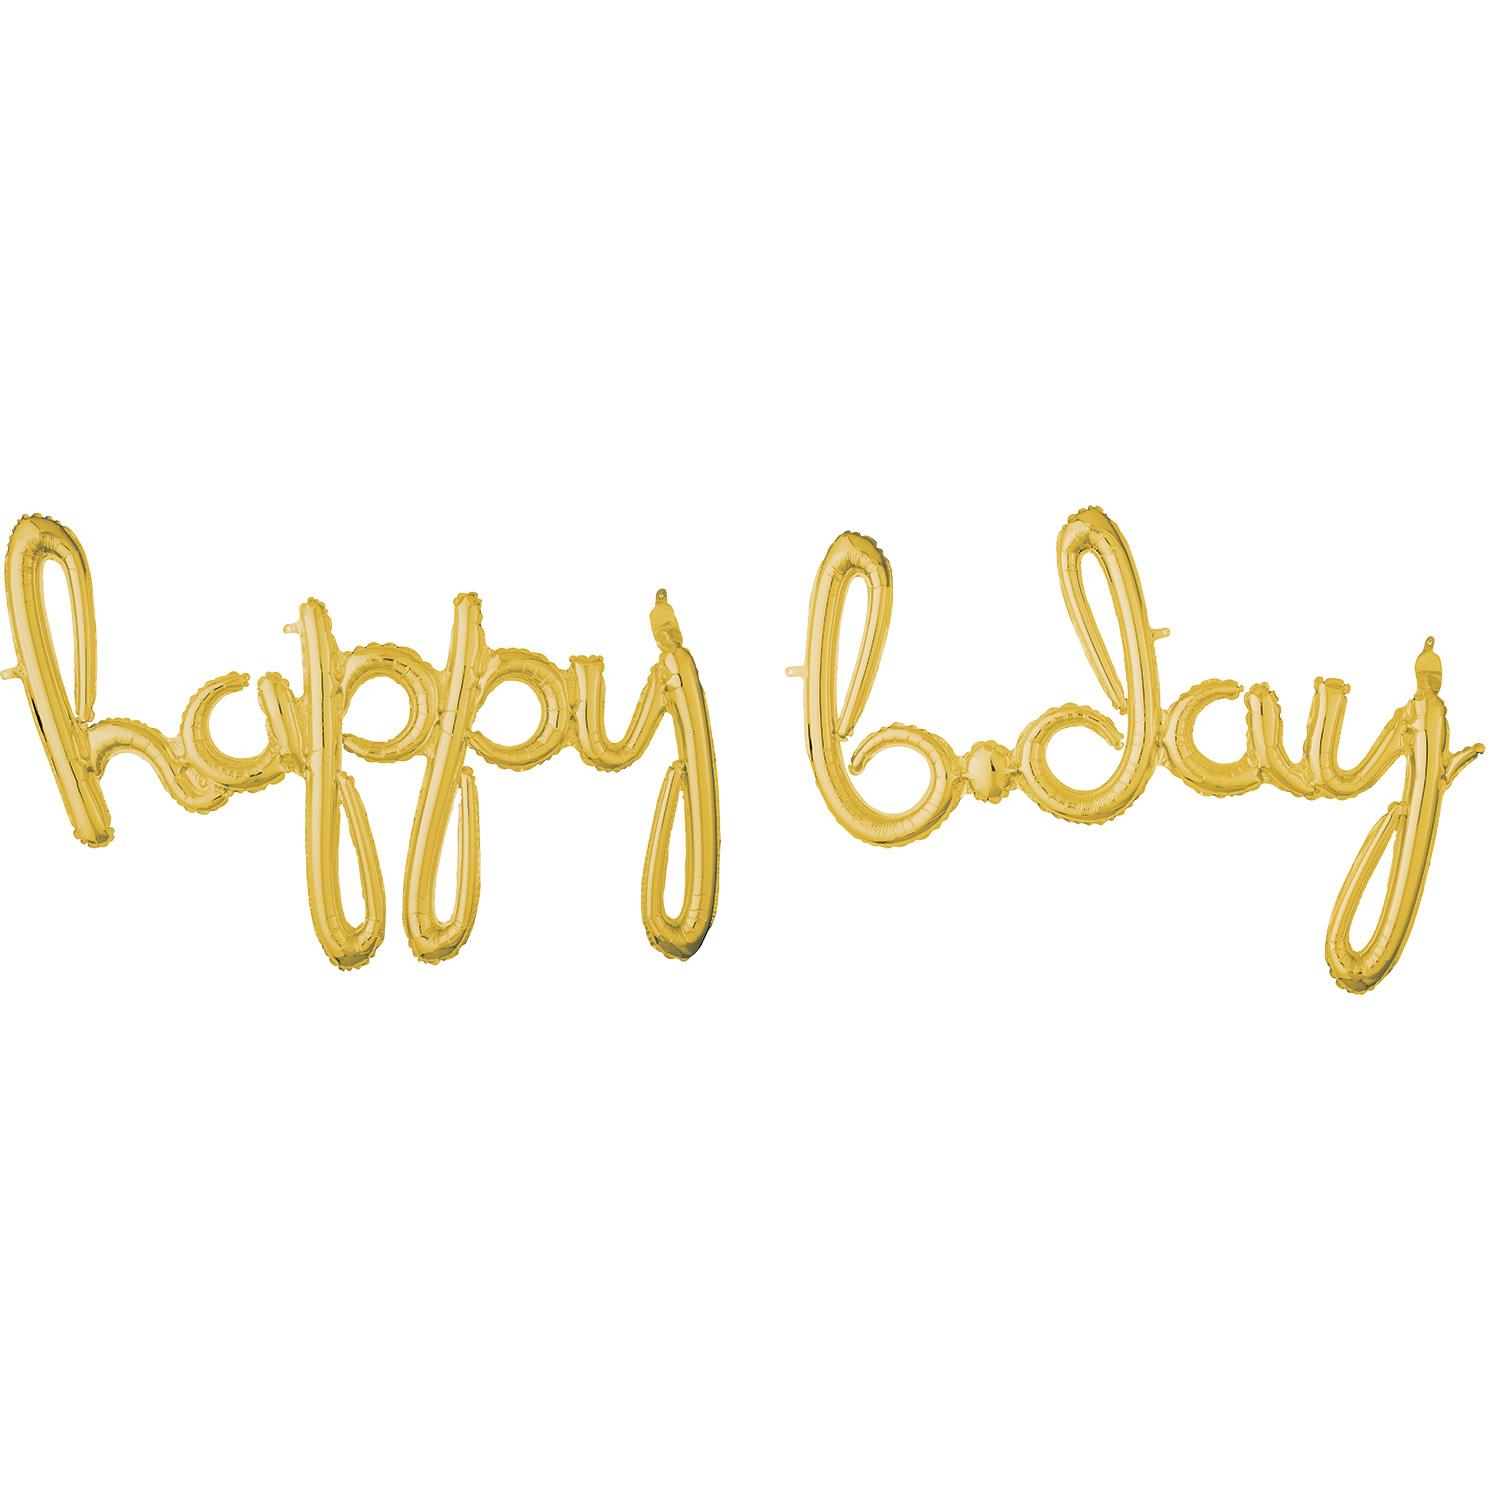 Happy Bday Script Phrase Gold Foil Balloon 88x63cm Balloons & Streamers - Party Centre - Party Centre